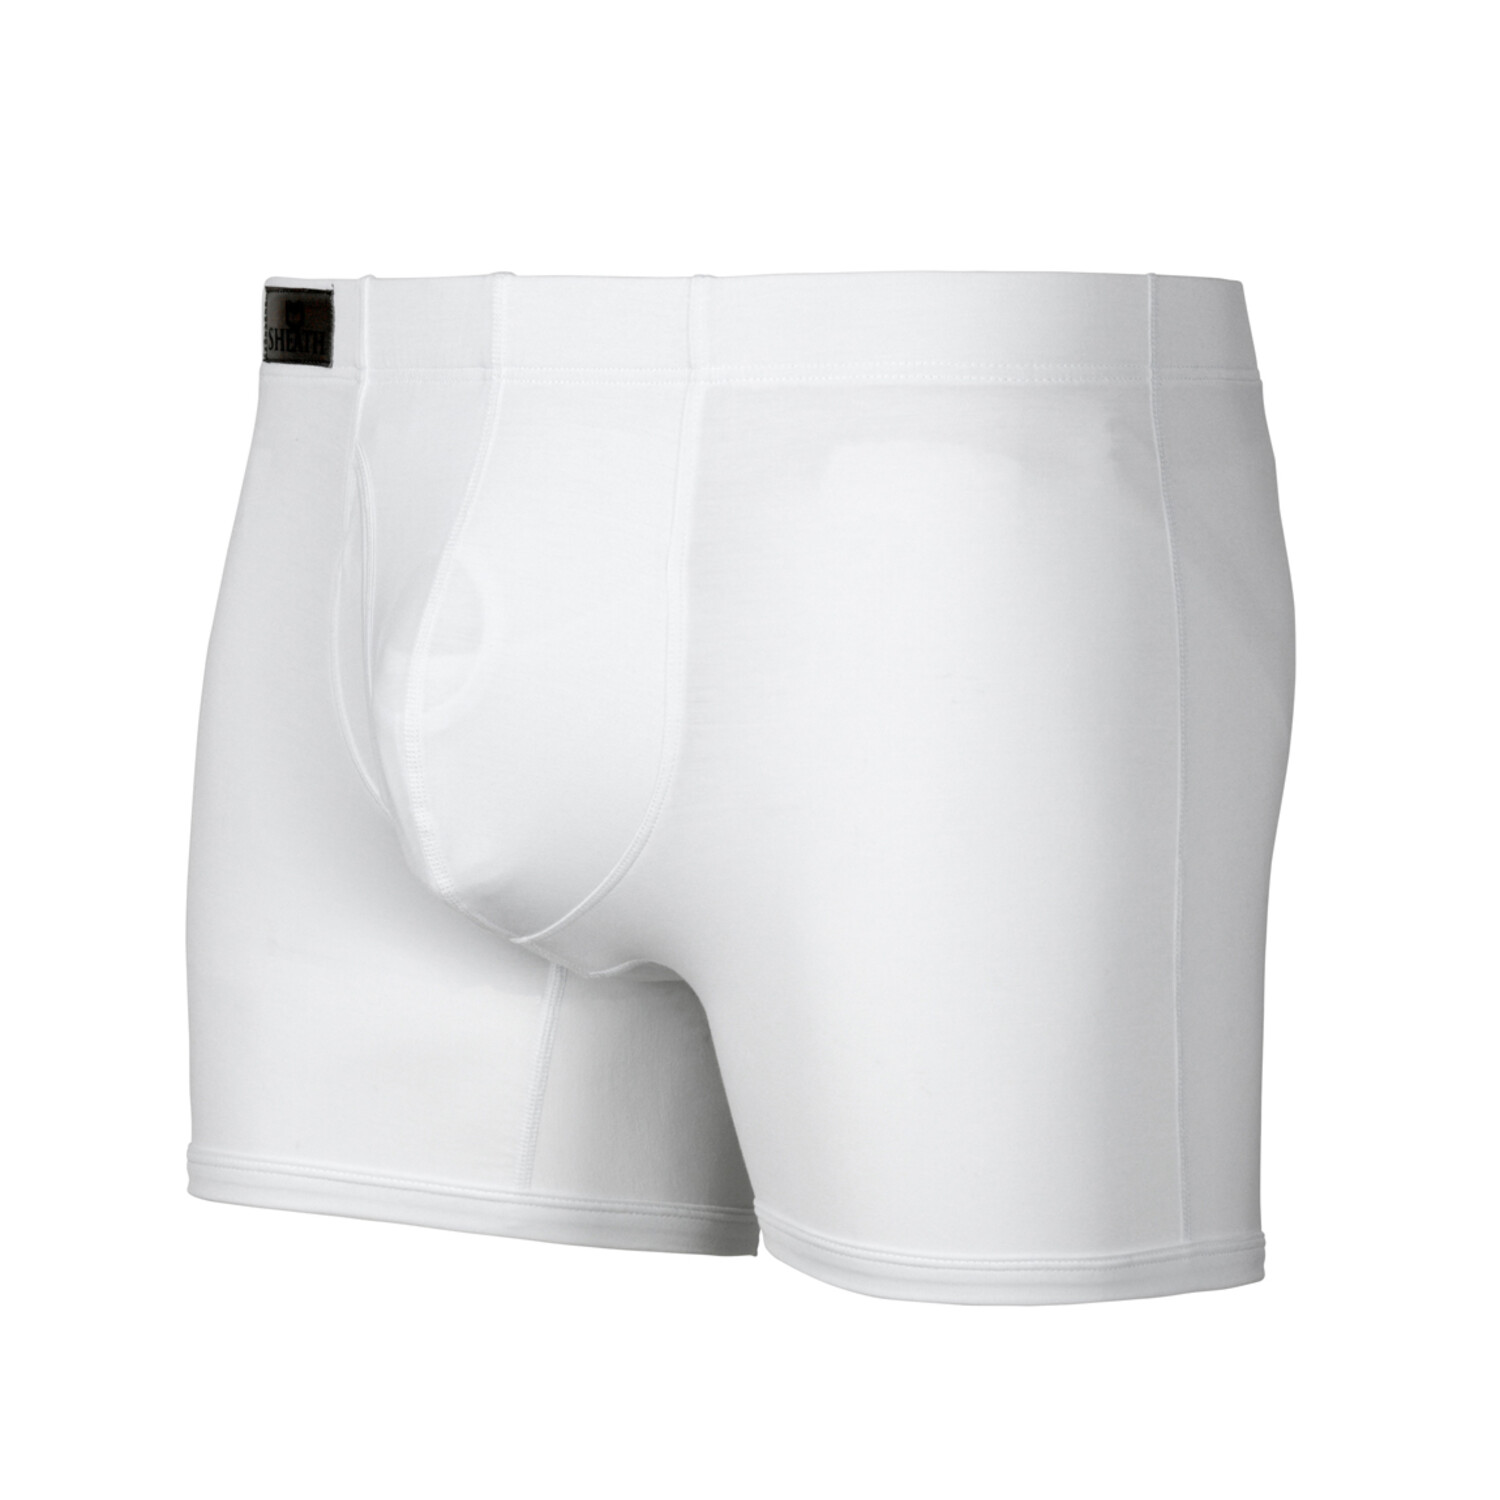 SHEATH 3.21 Men's Dual Pouch Boxer Brief // White (Large) - Sheath Dual-pouch  Boxer Briefs - Touch of Modern